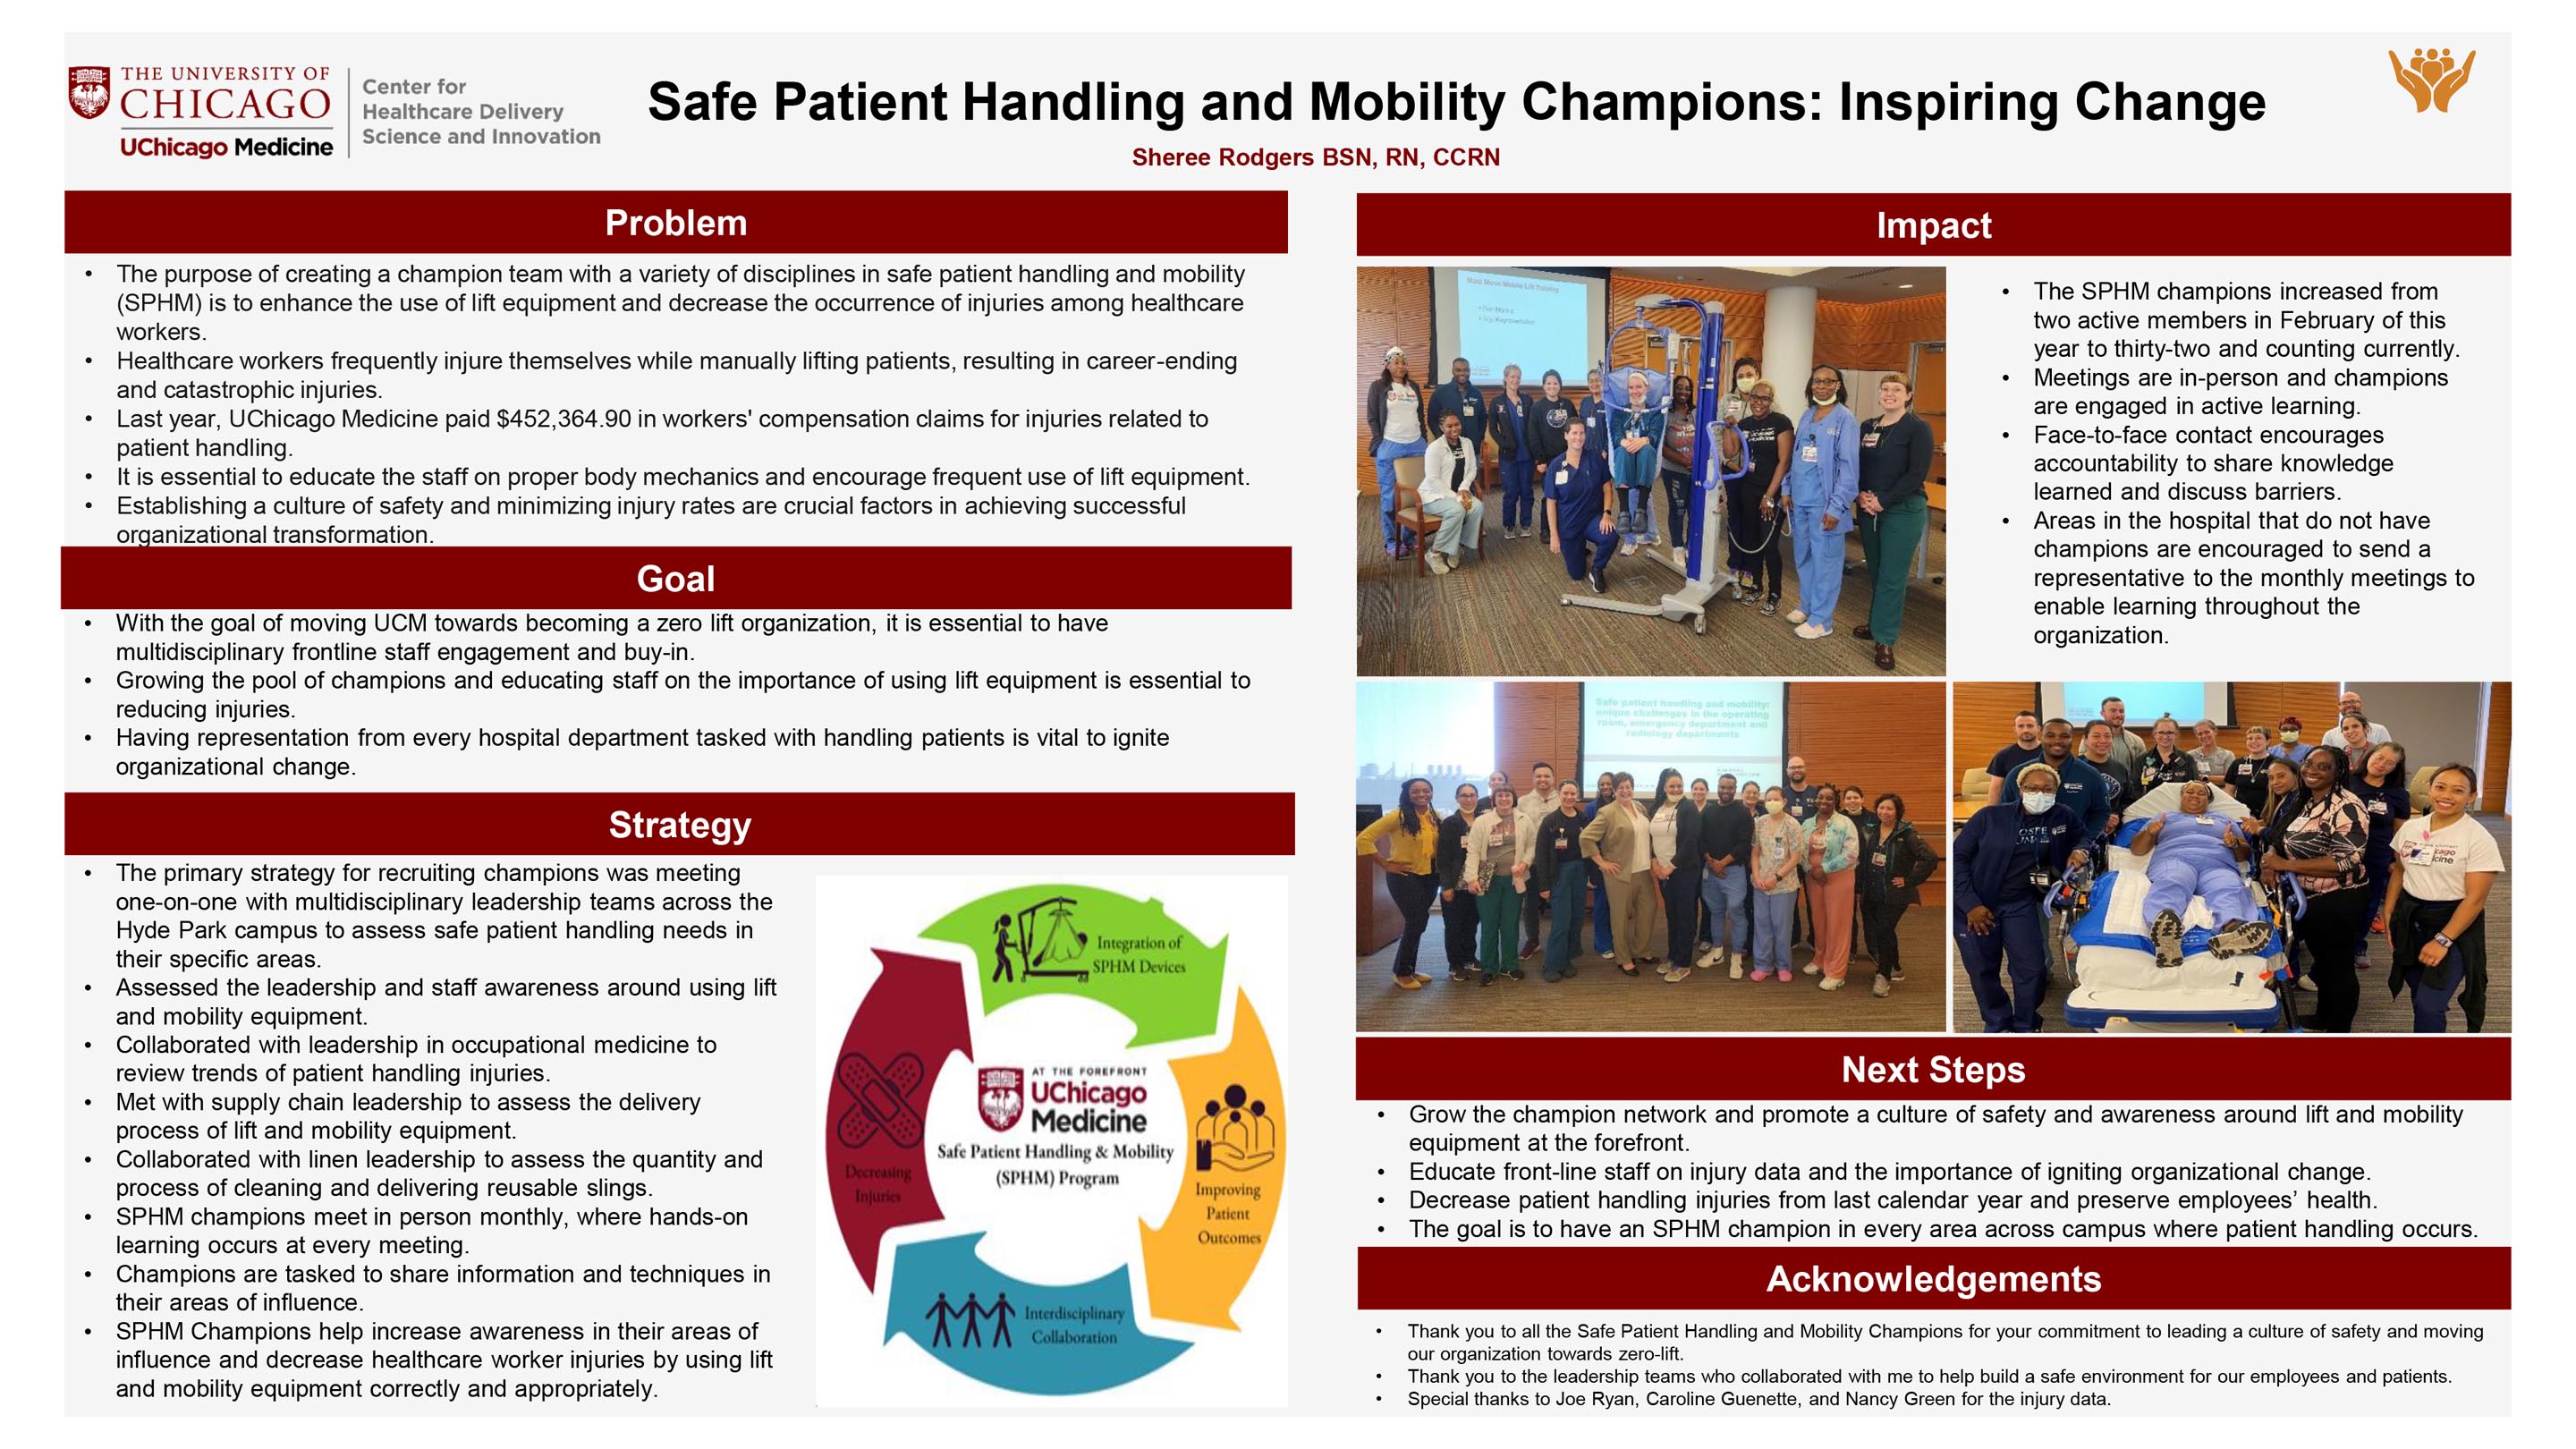 RODGERS_Safe-Patient-Handling-Champions-Inspiring-Change